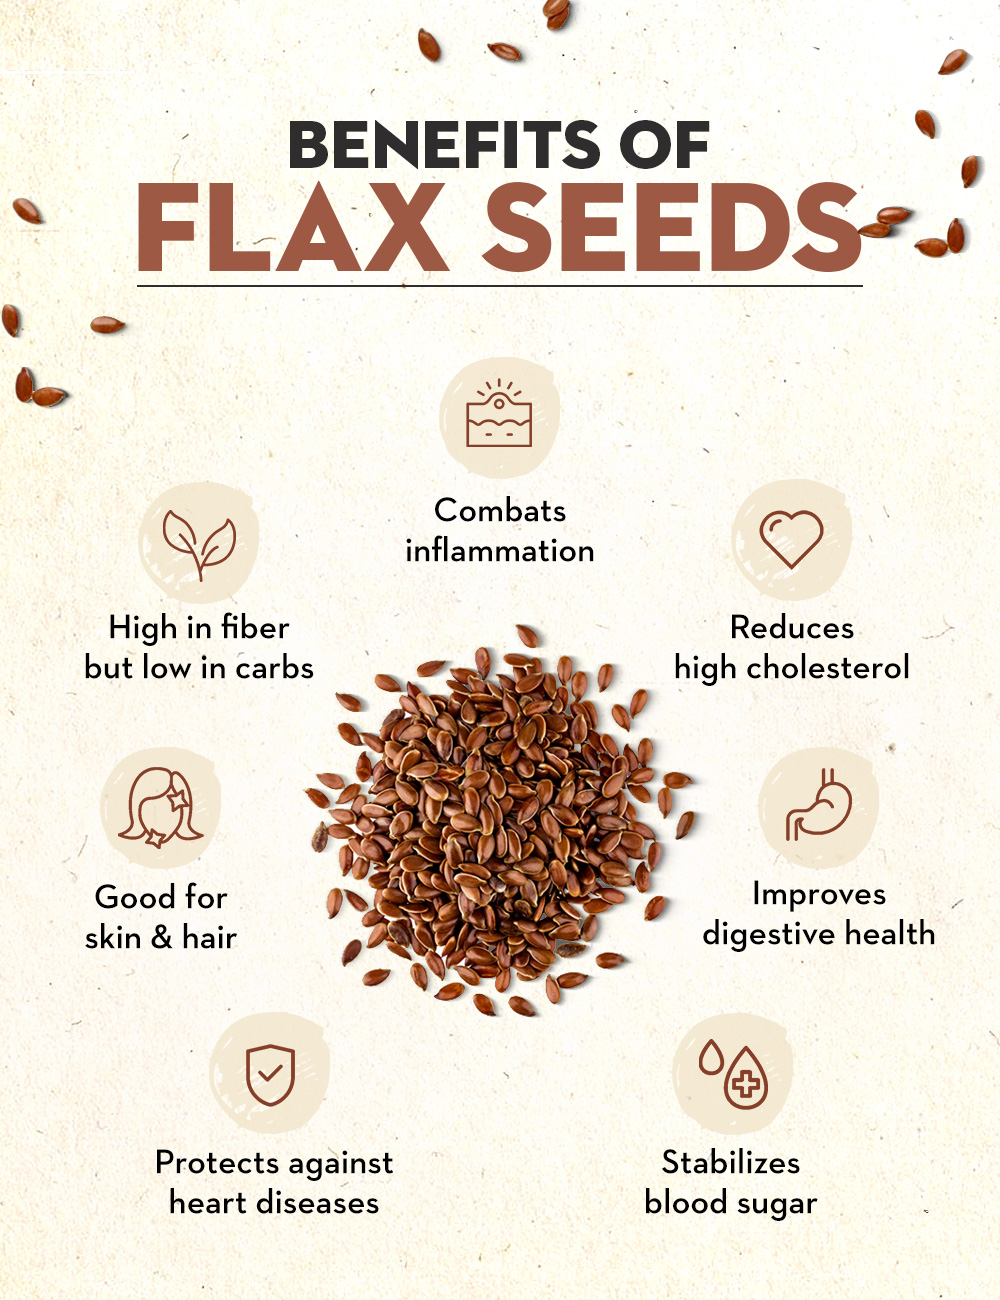 Flaxseed health benefits